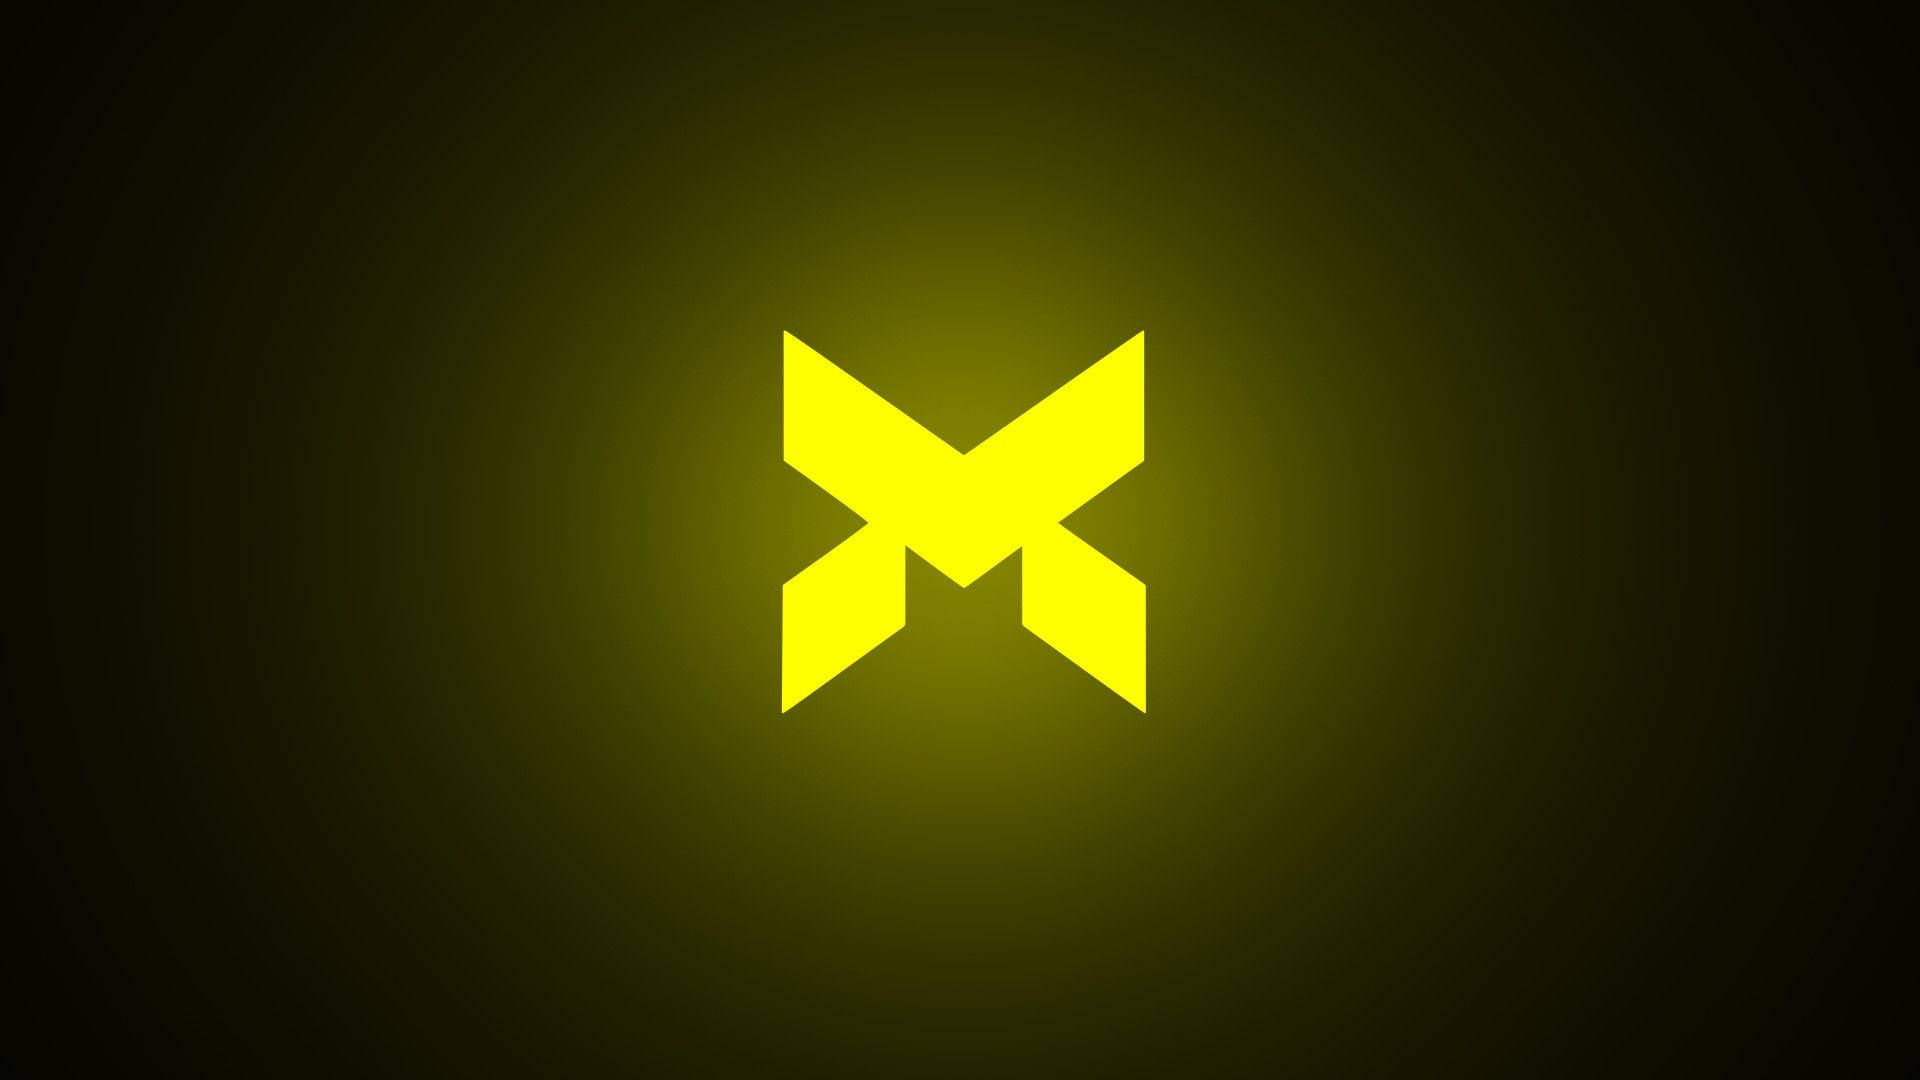 The Yellow X - A Classic Symbol Highlighting Corsair Wallpaper